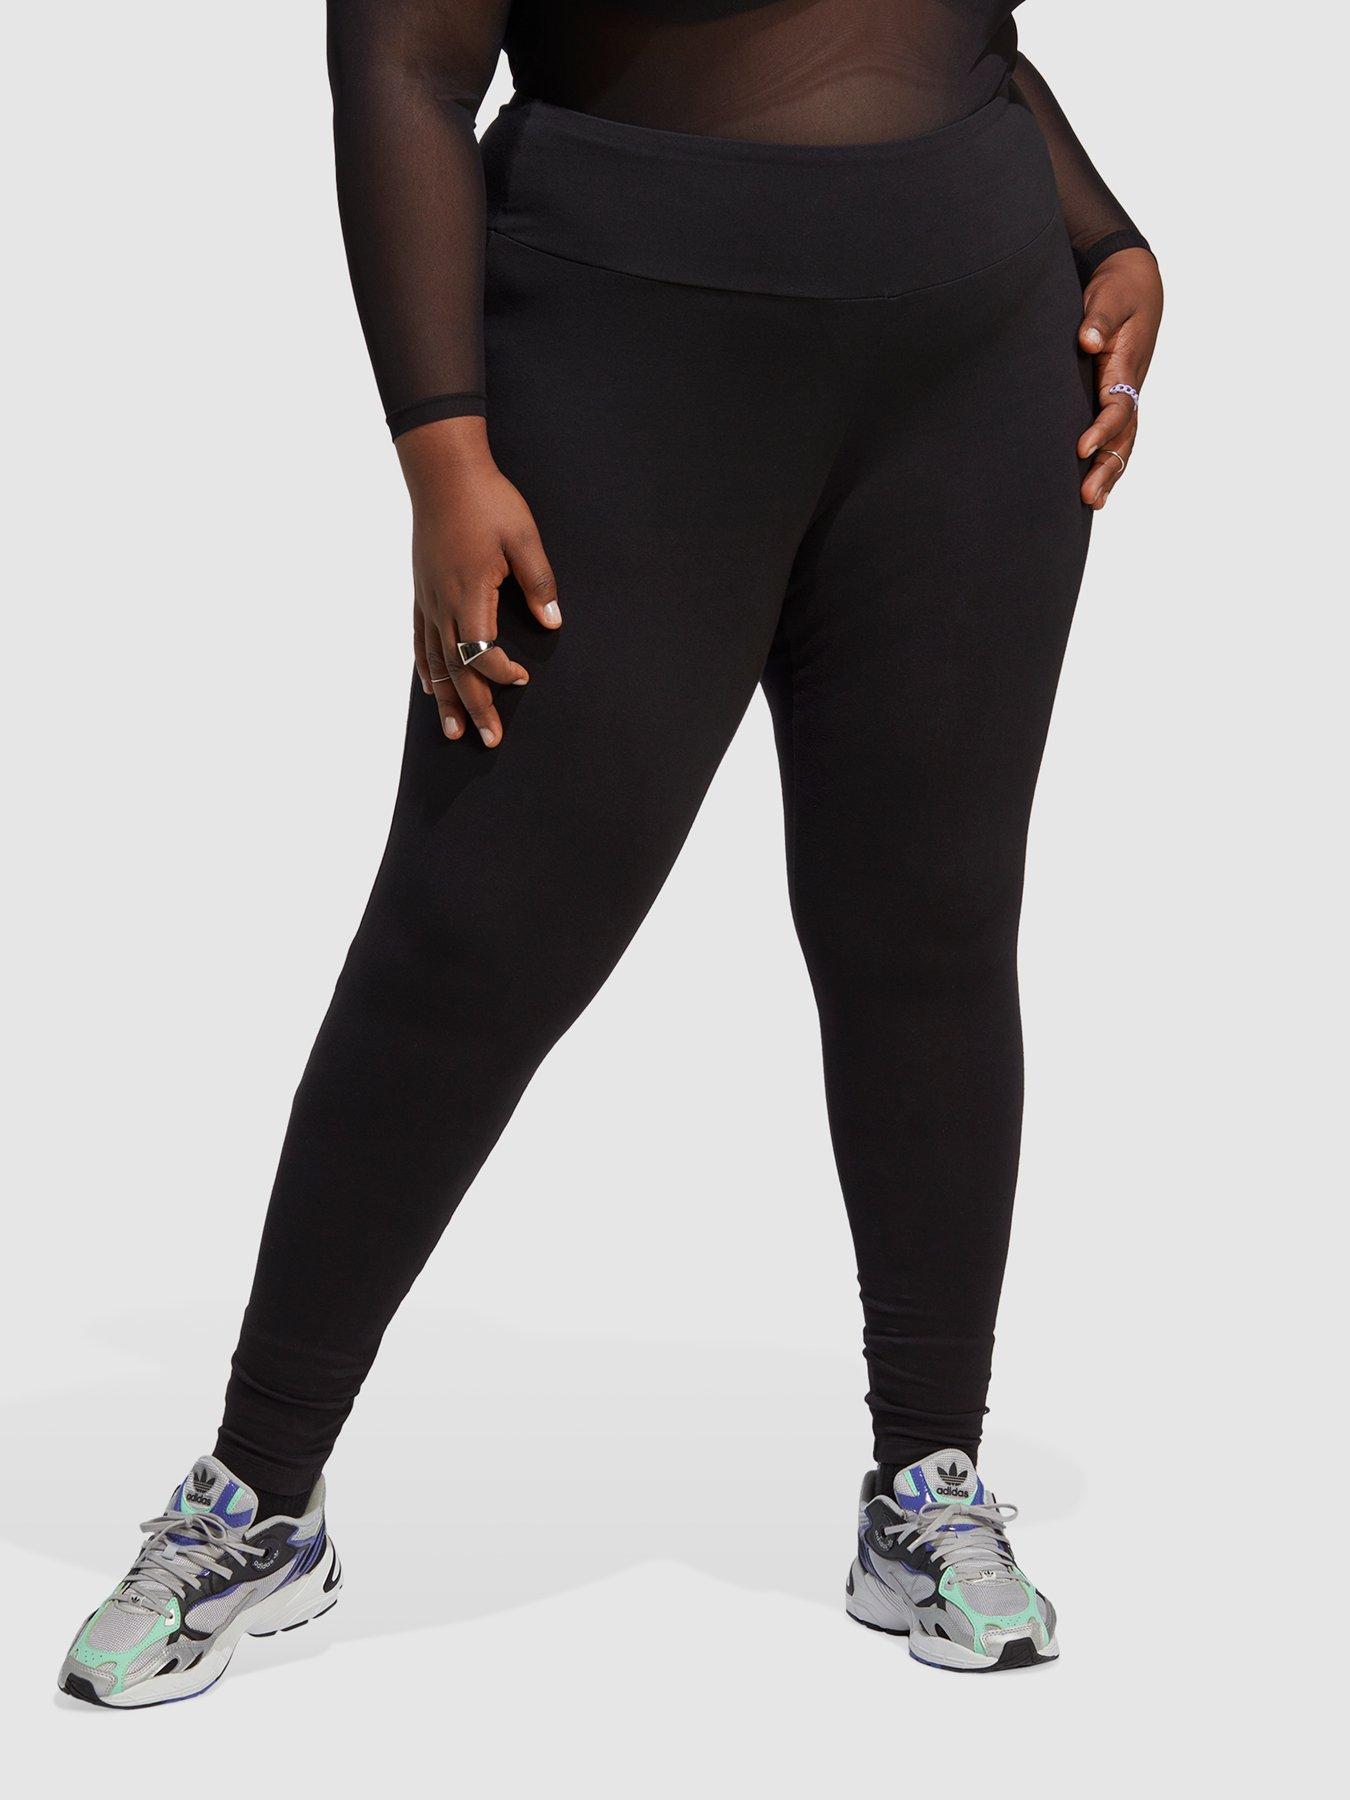 Nike Women's Swoosh Running Leggings Tights Black/White Size